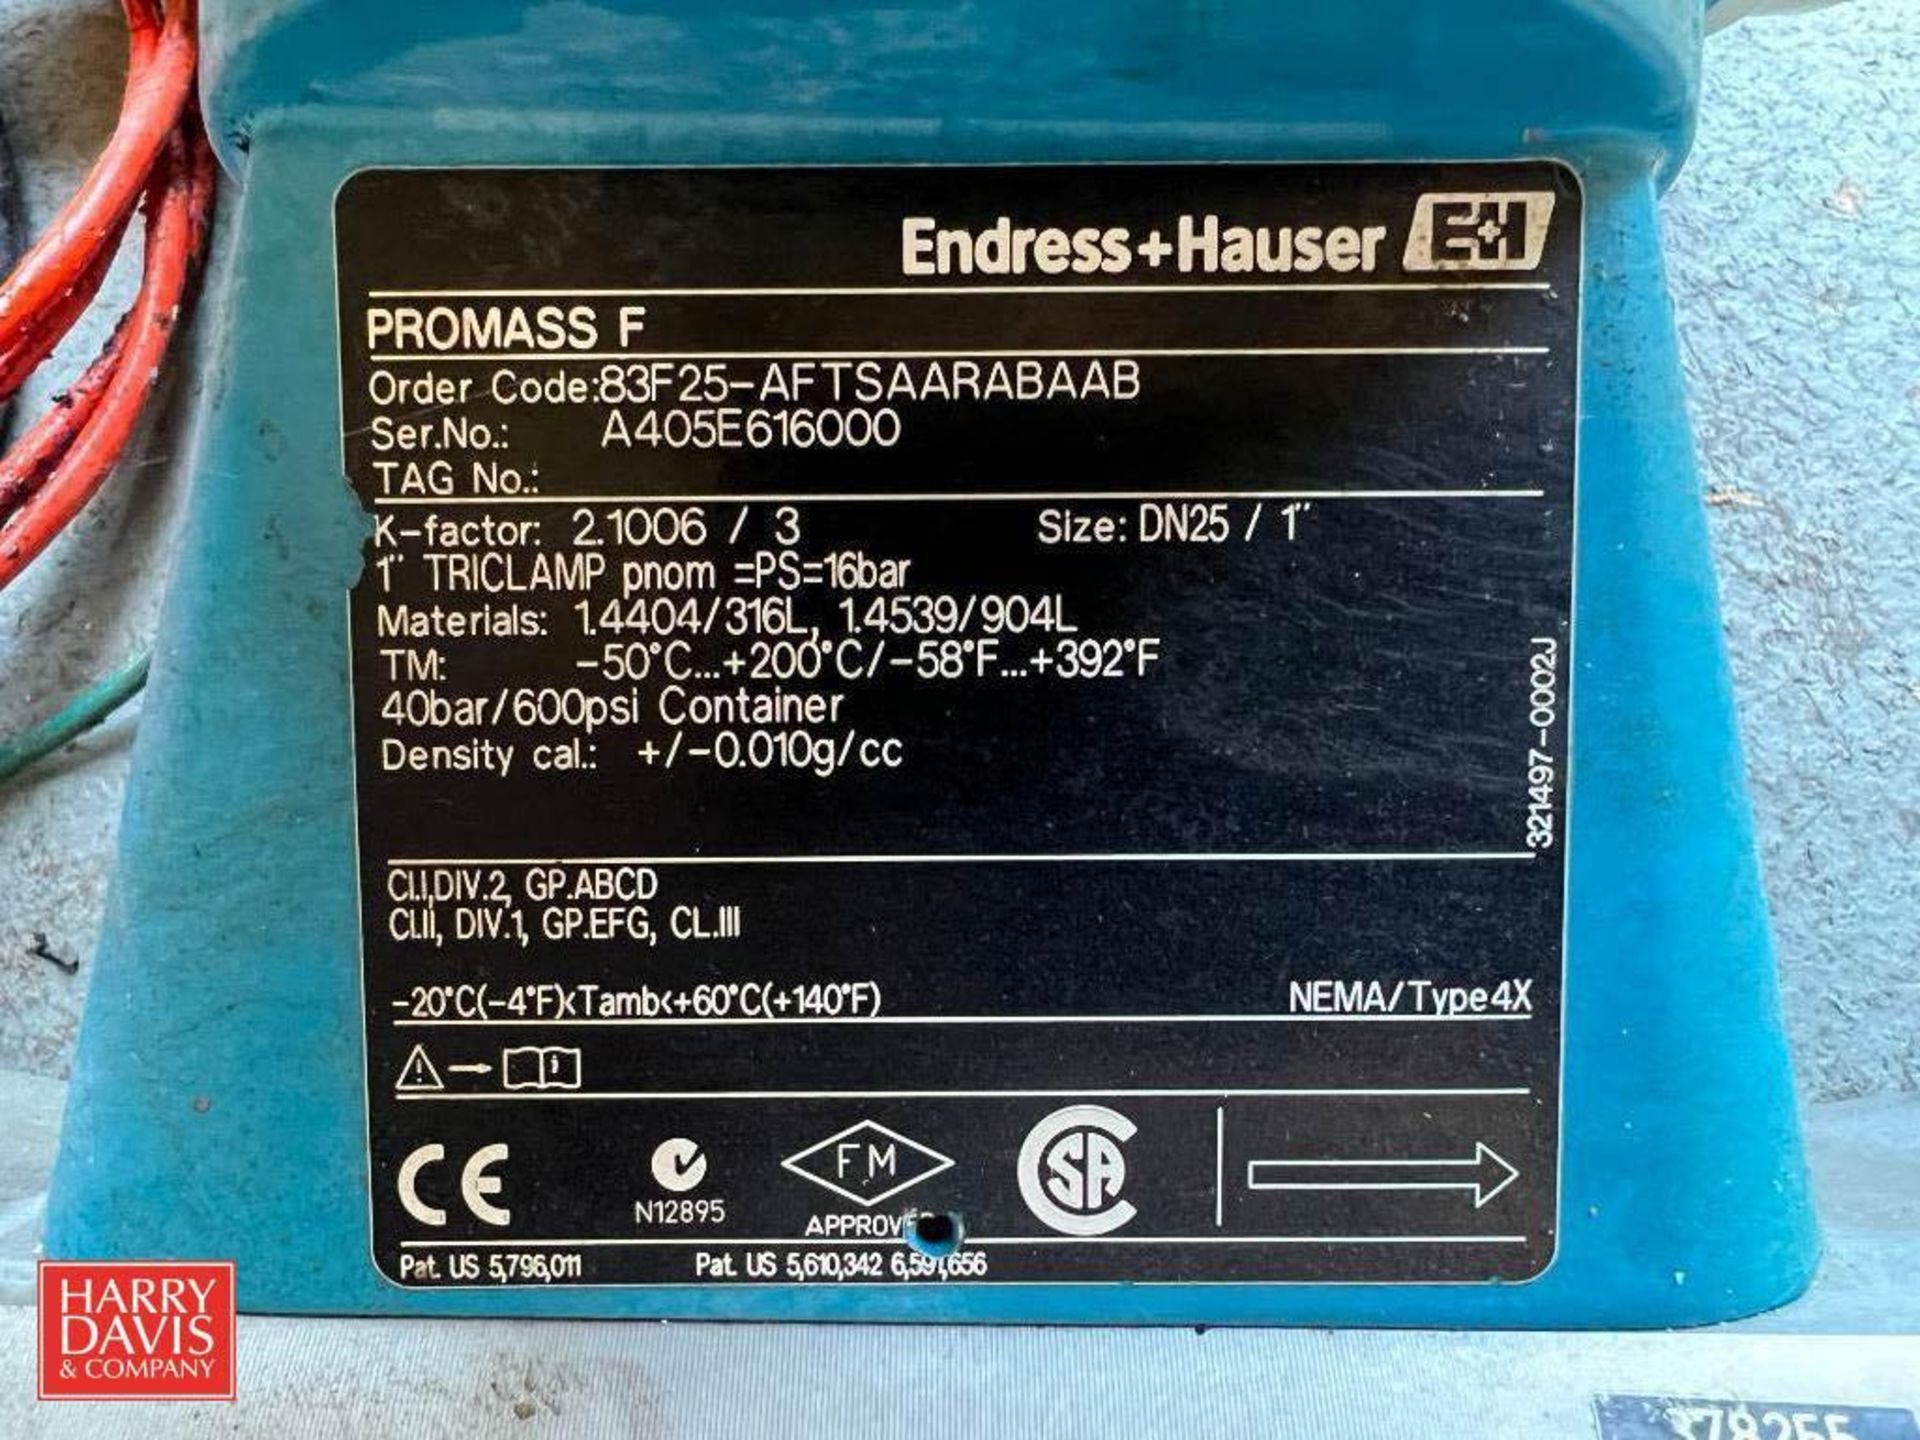 Endress+Hauser 1" Flow Meter, Order Code: 83F25-AFTSAARABAAB, S/N: A405E616000 - Rigging Fee: $25 - Image 2 of 2